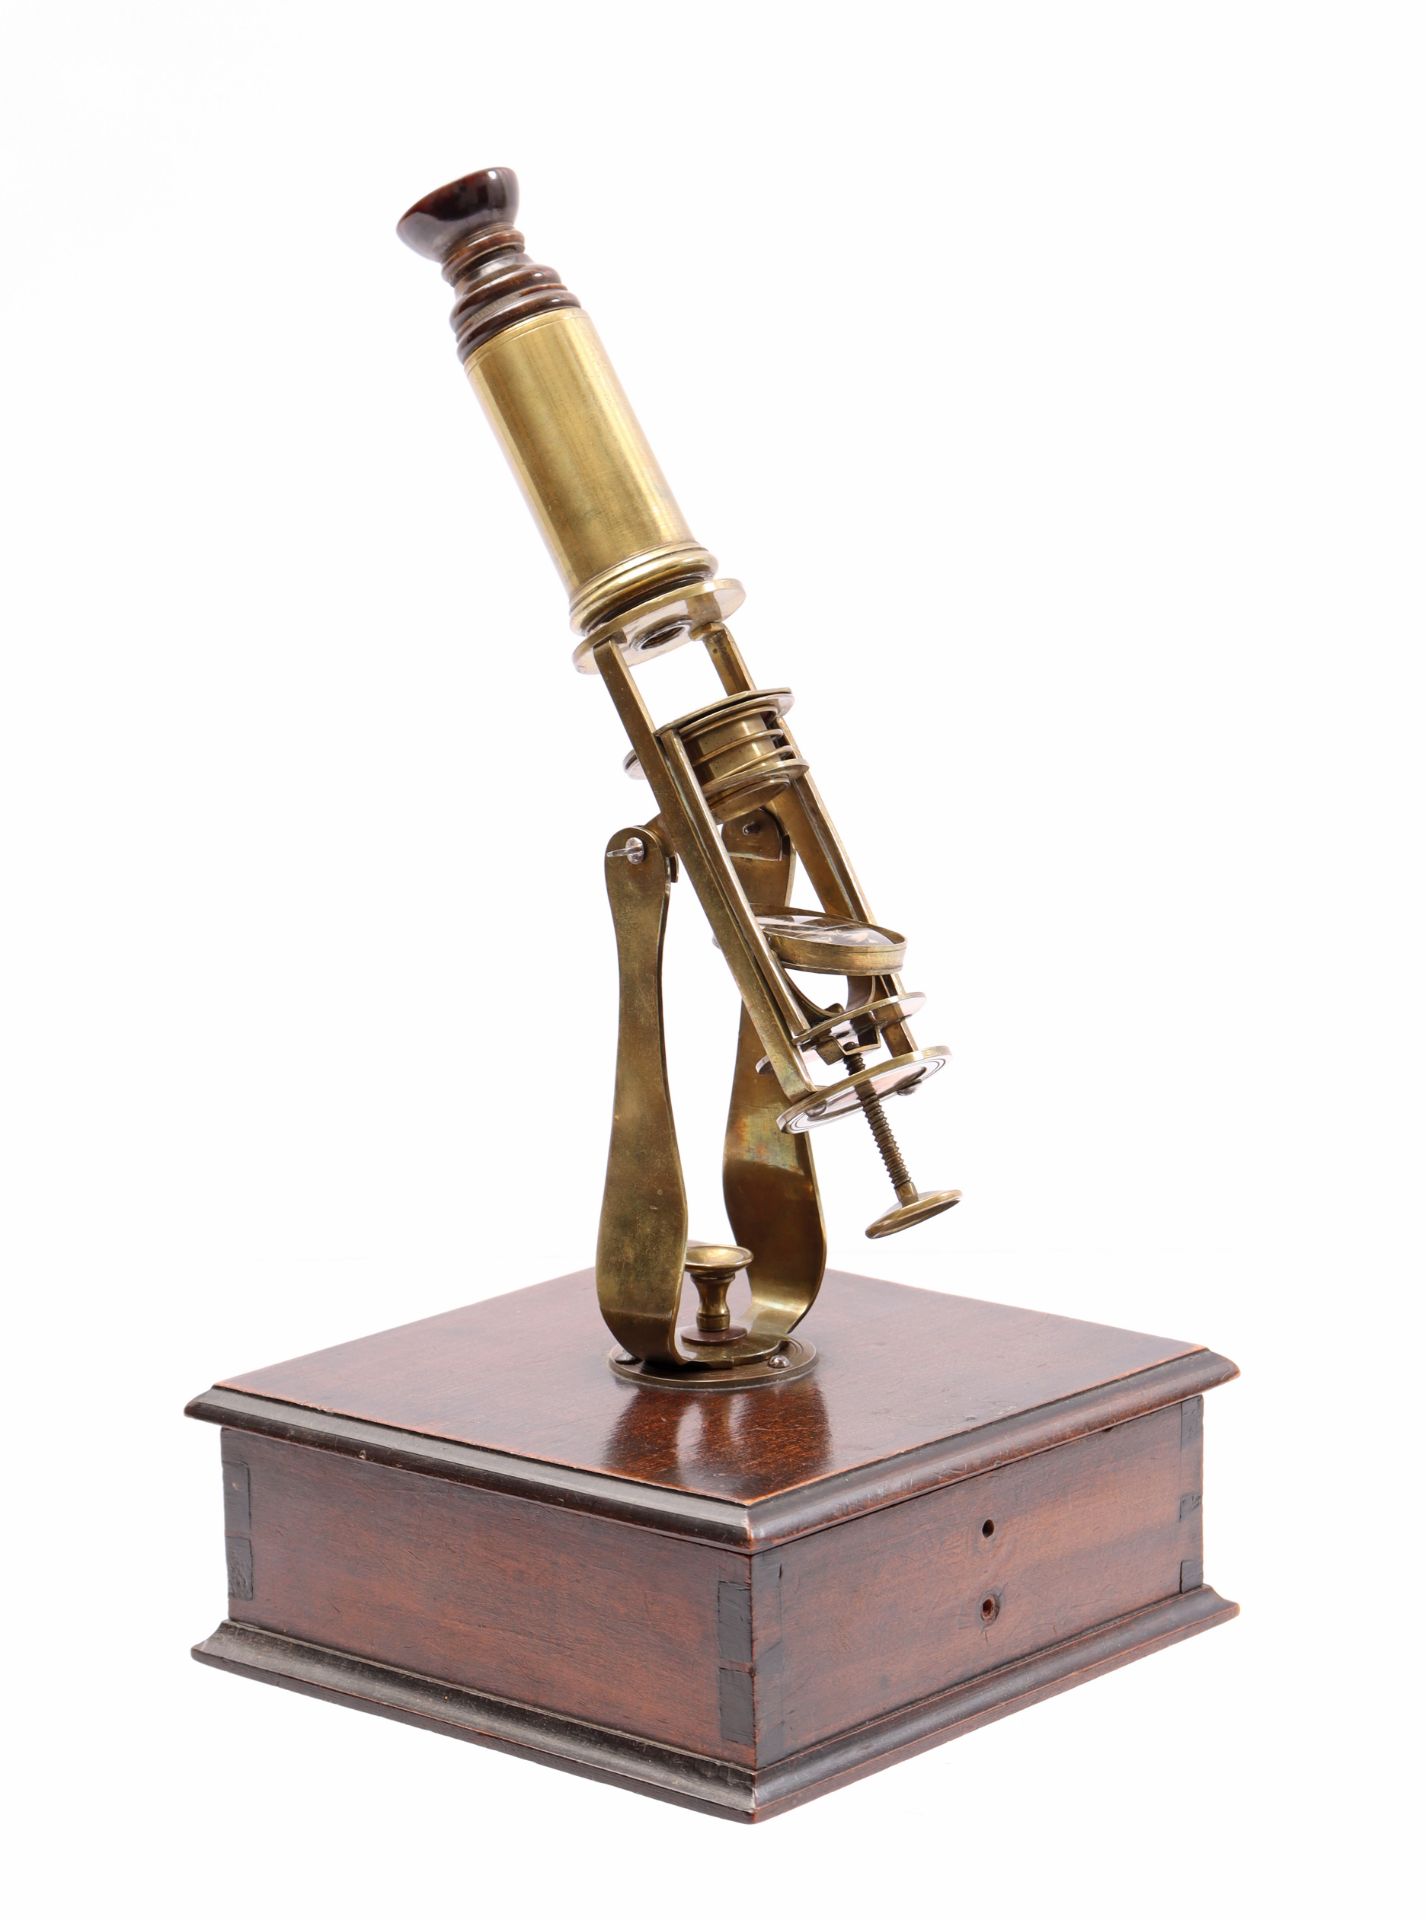 Brass travel microscope in wooden box